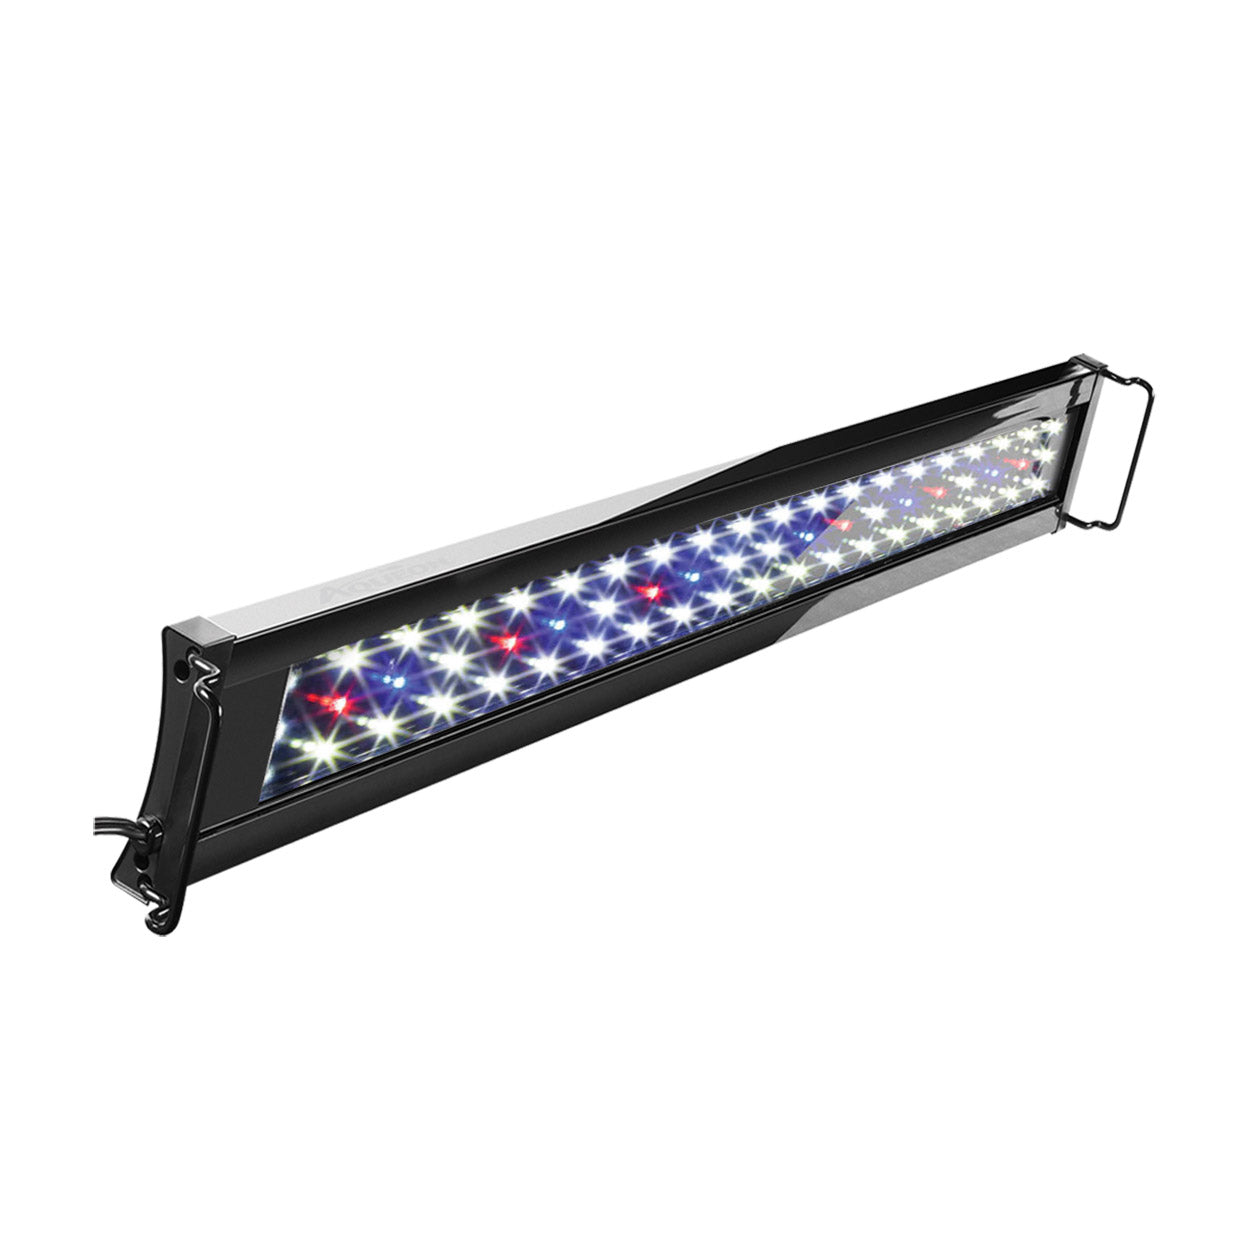 Aqueon OptiBright LED Light